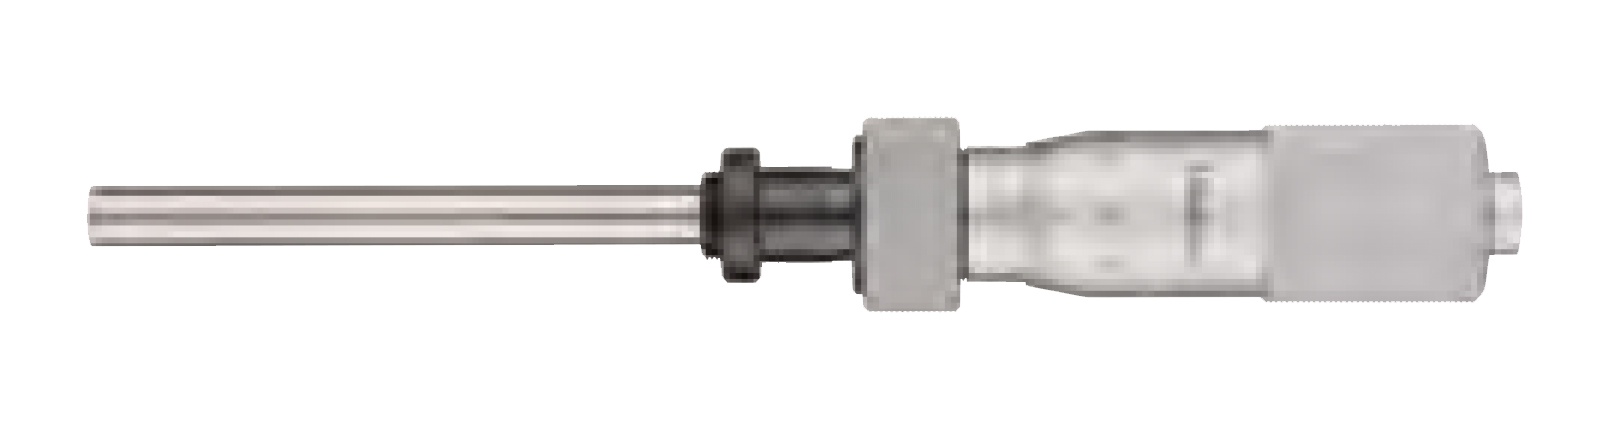 Micrometer Heads SERIES 150 — Medium-sized Standard Type